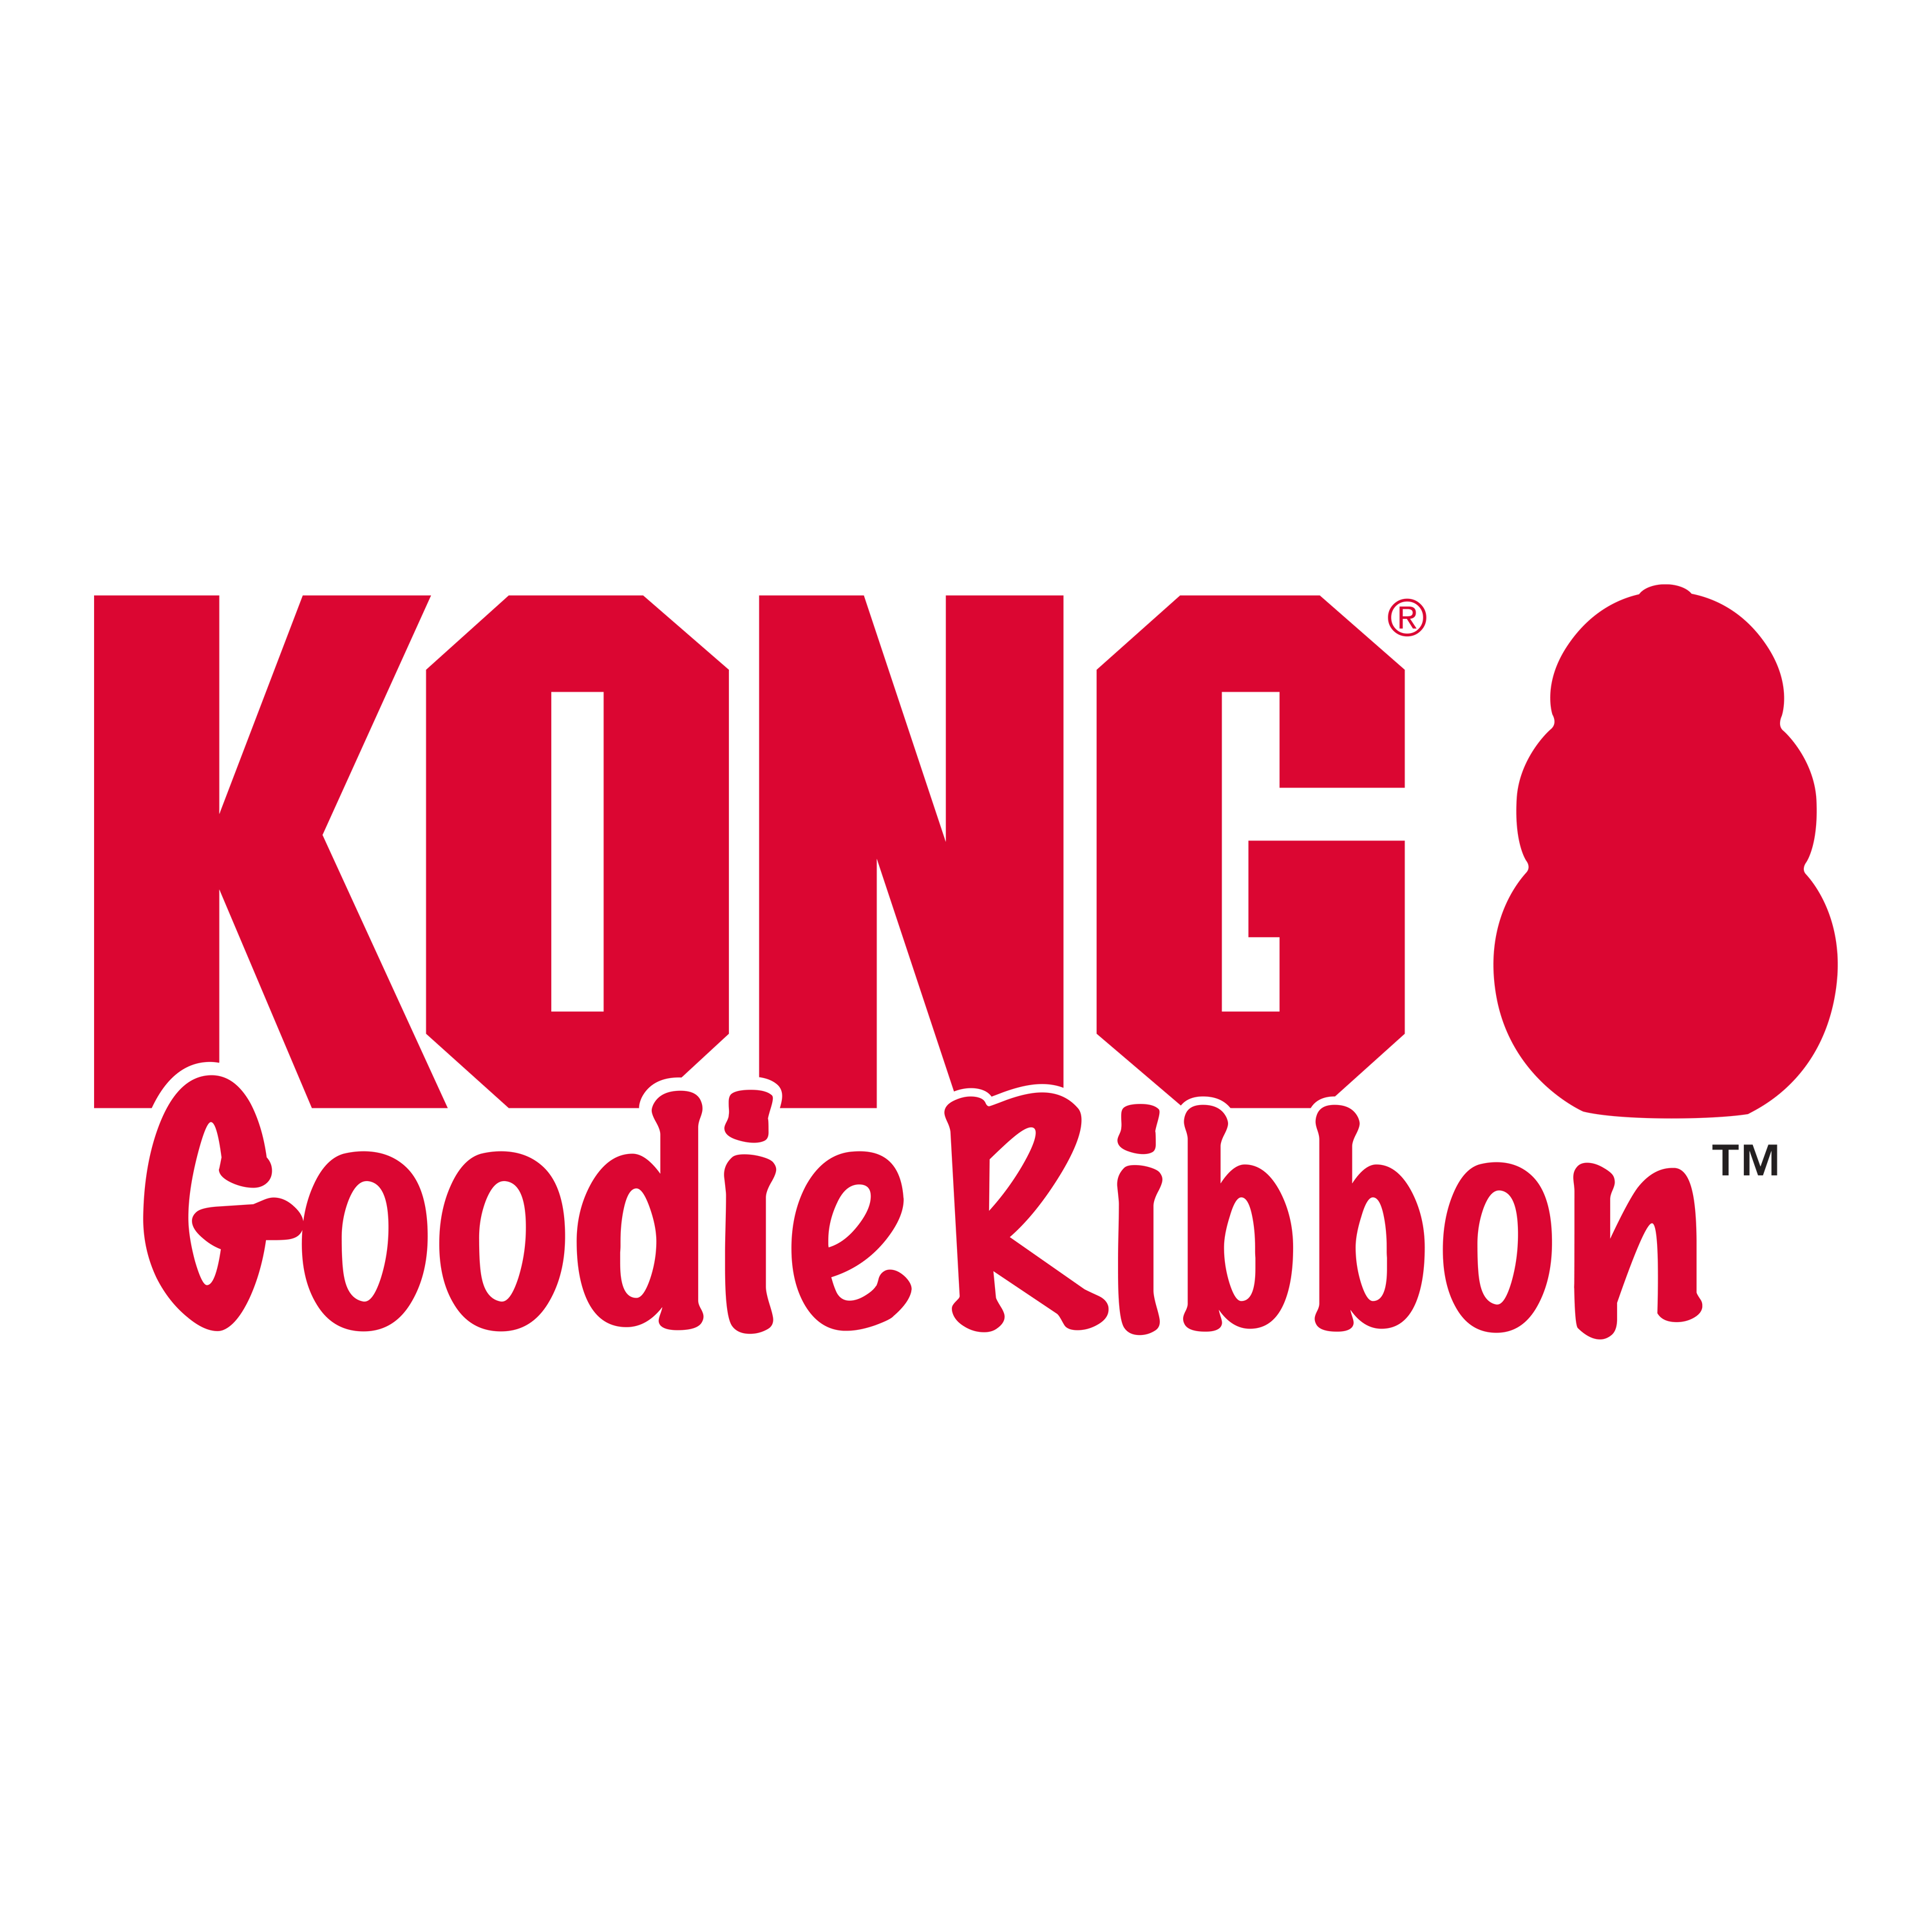 KONG Goodie Ribbon alt1 product image